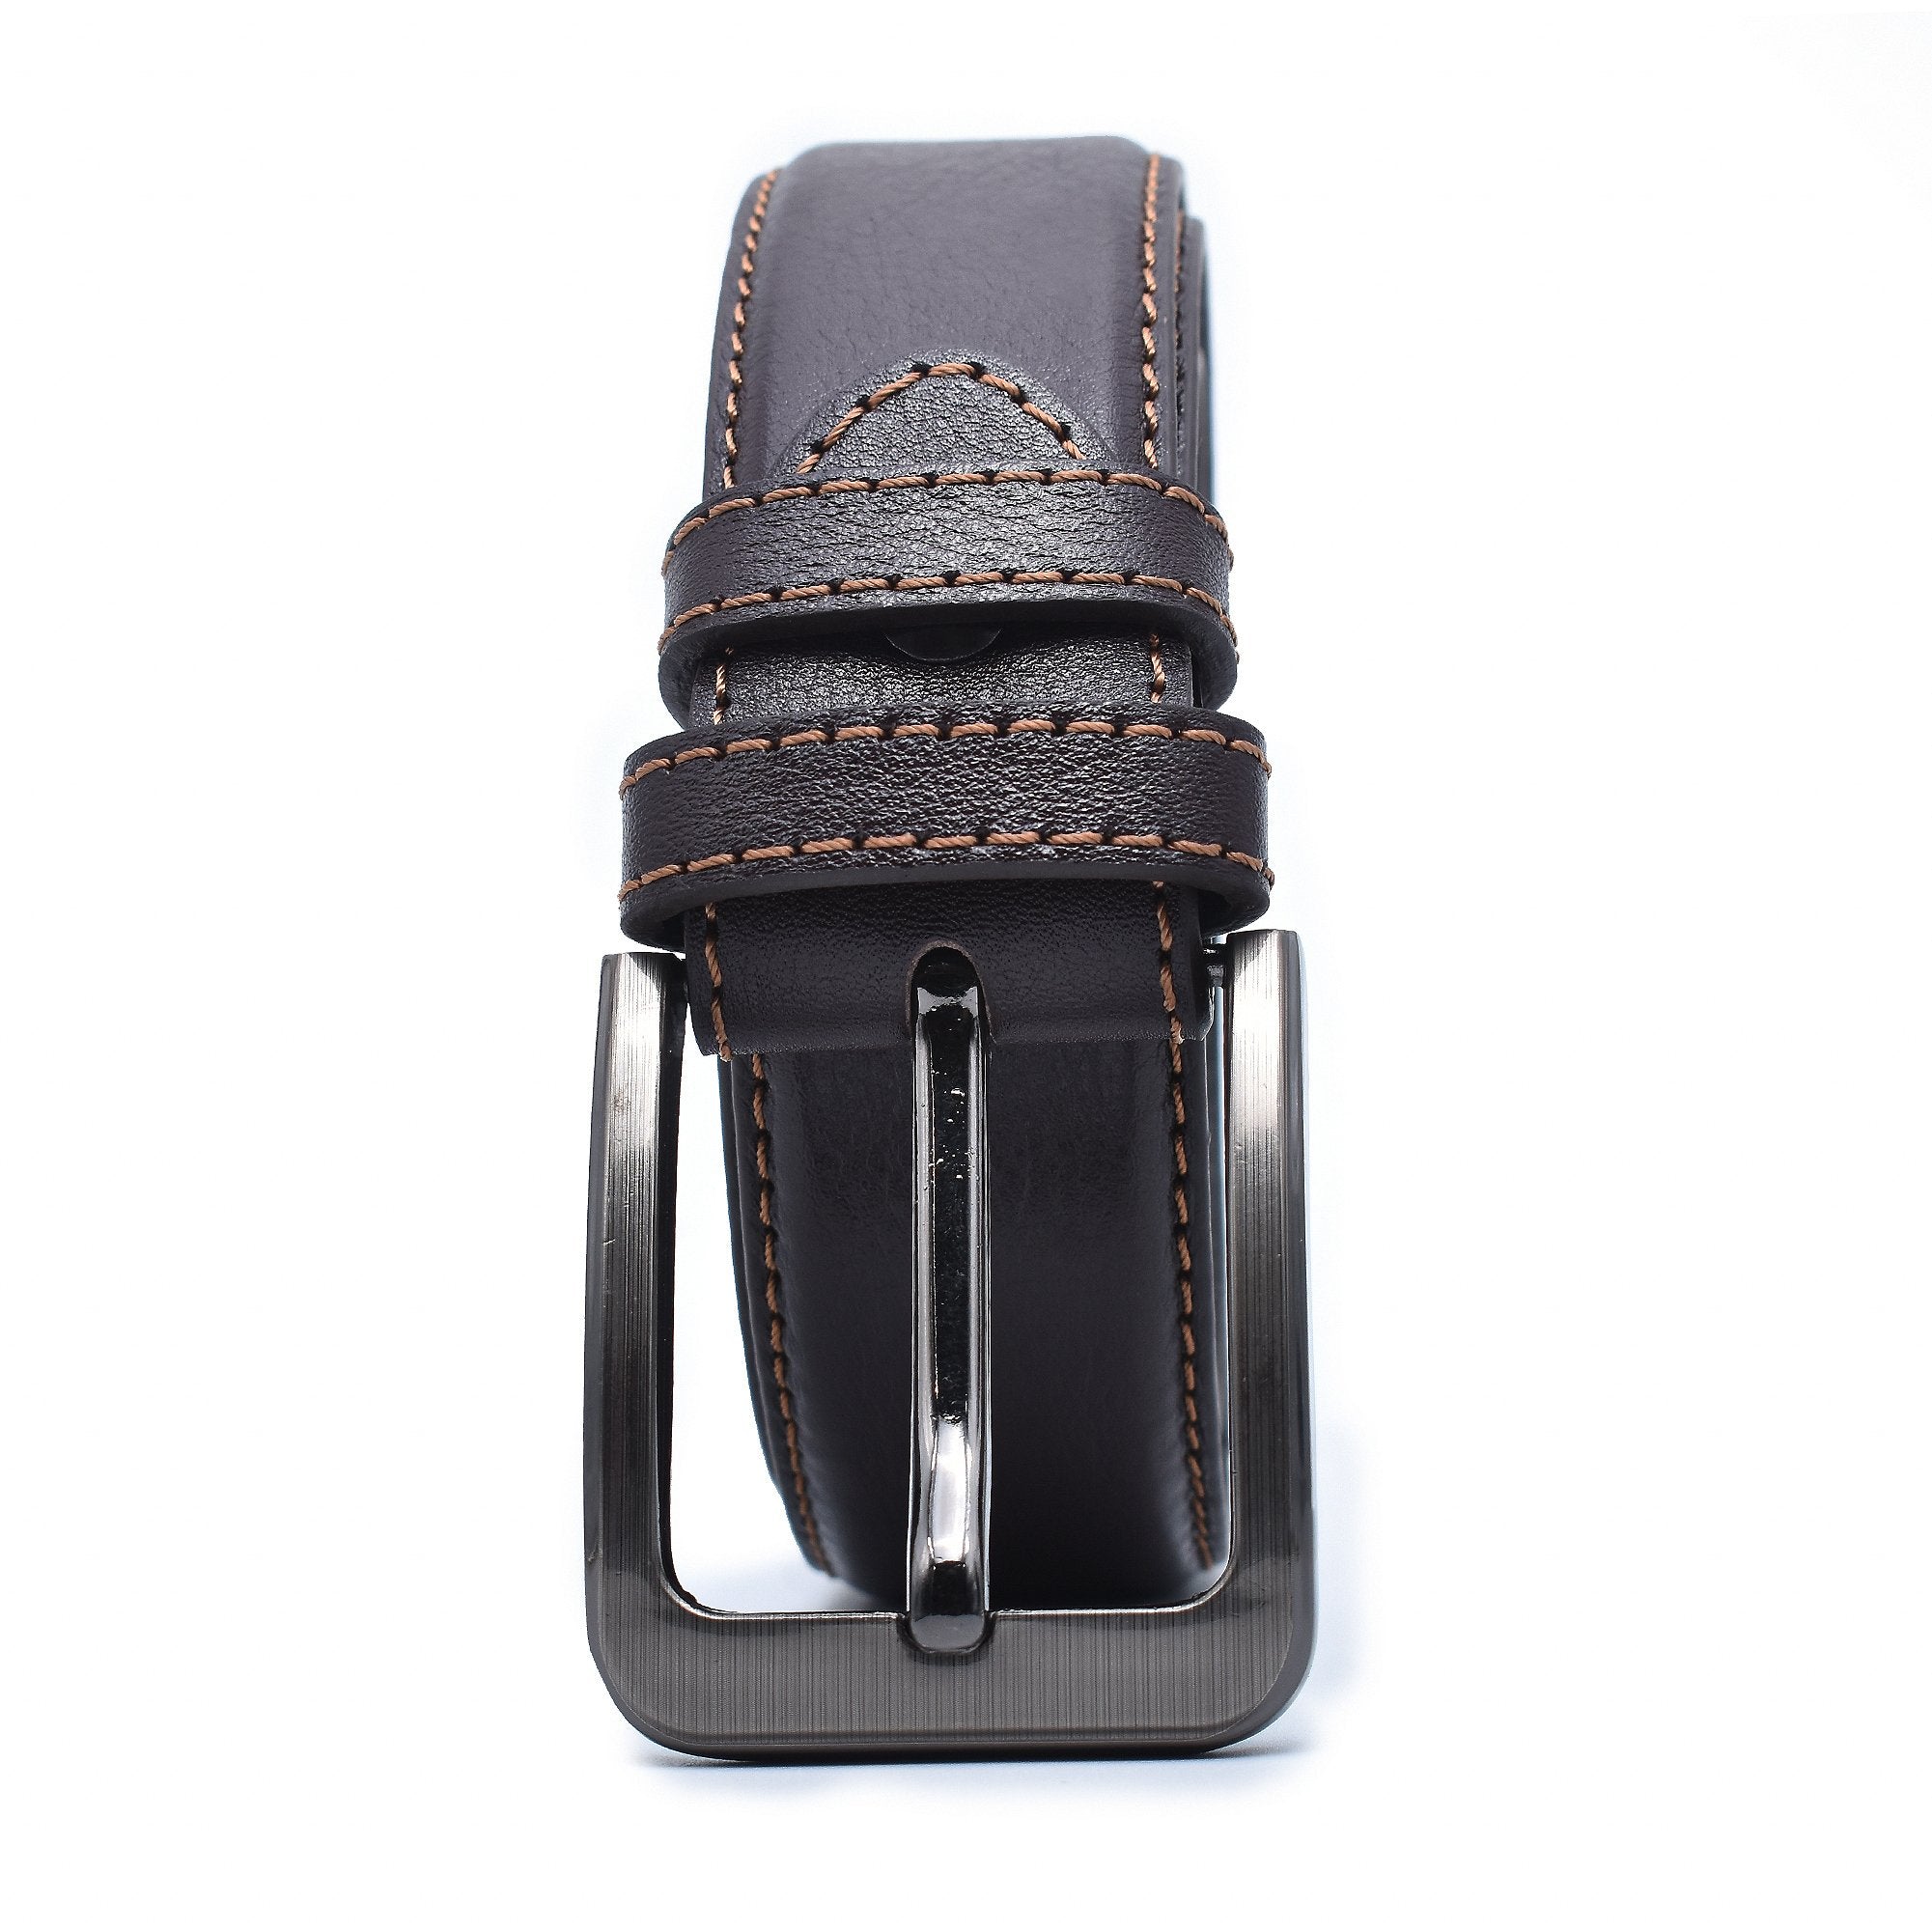 Zays Leather Belt for Men - (Chocolate) ZAYSBL11